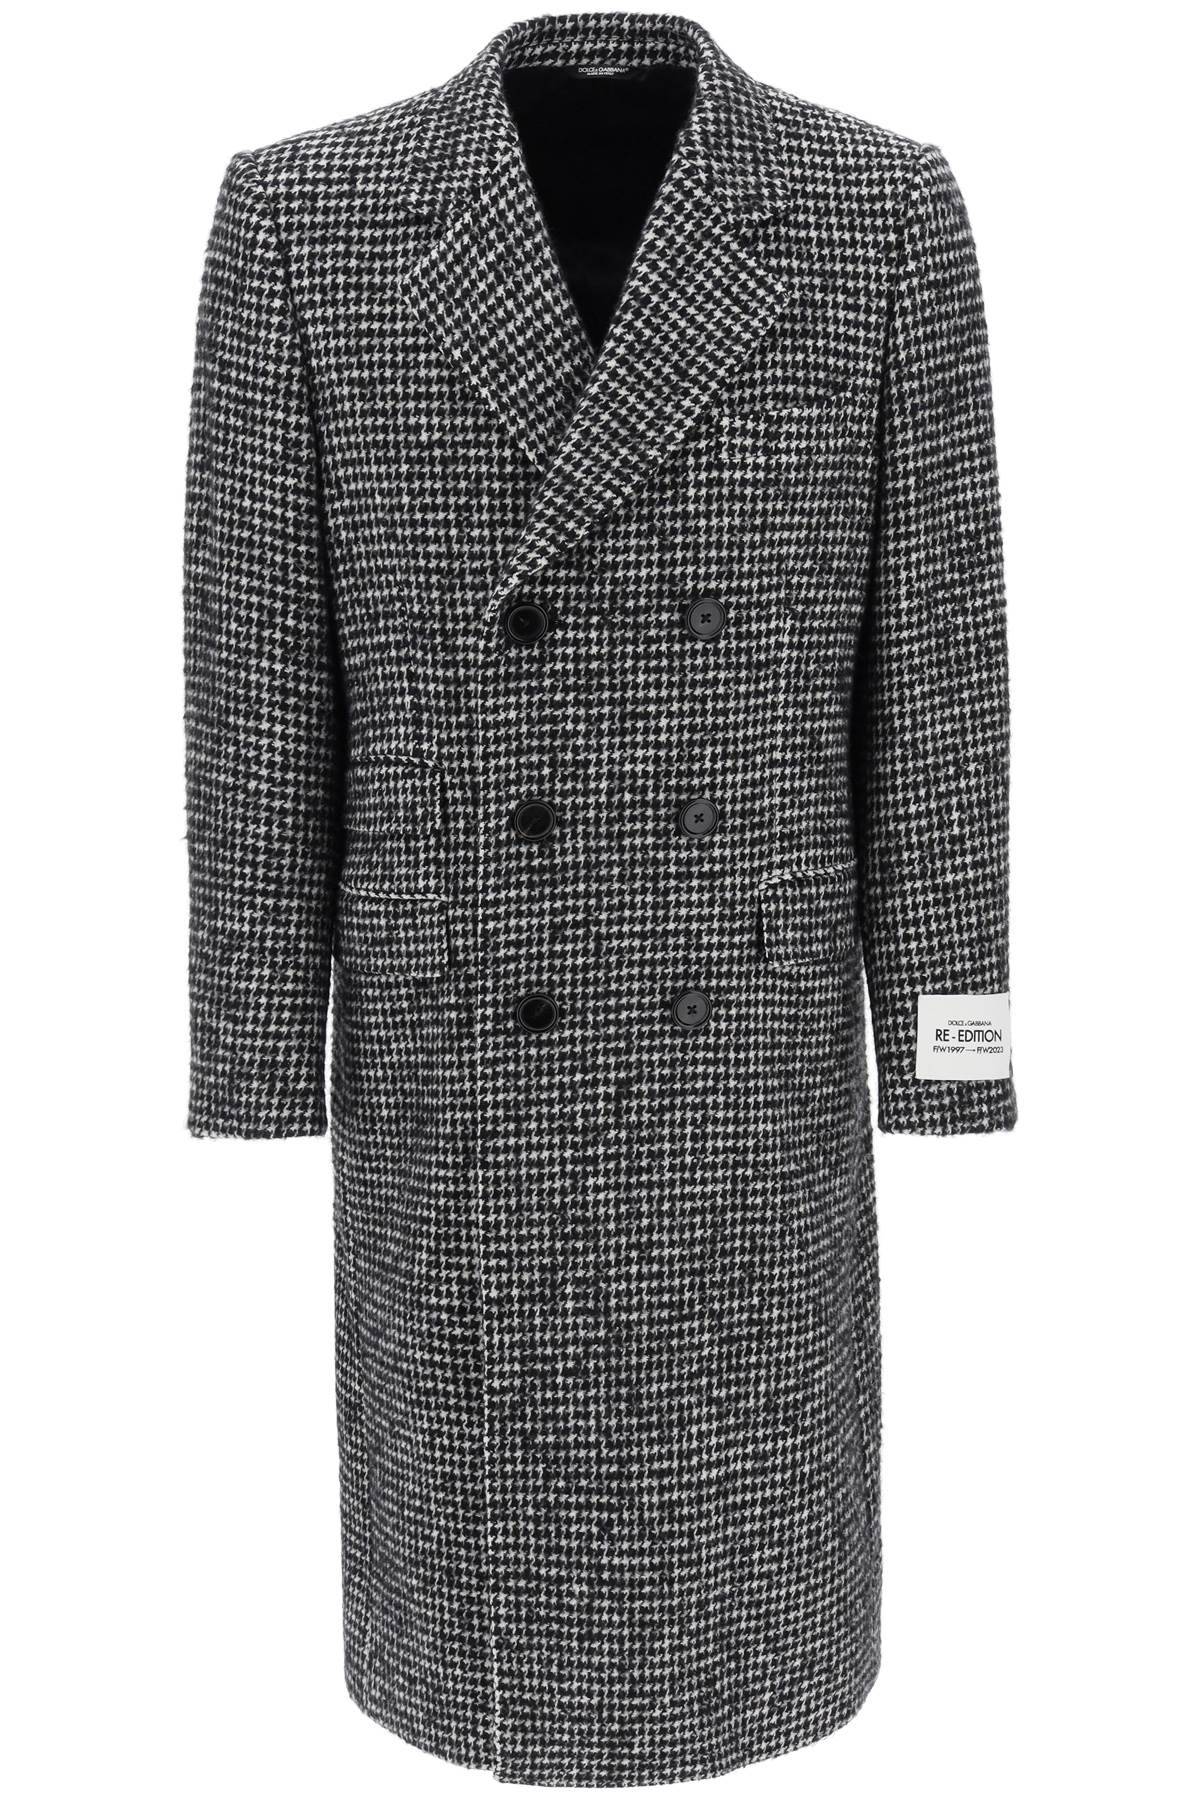 Dolce & Gabbana DOLCE & GABBANA re-edition coat in houndstooth wool